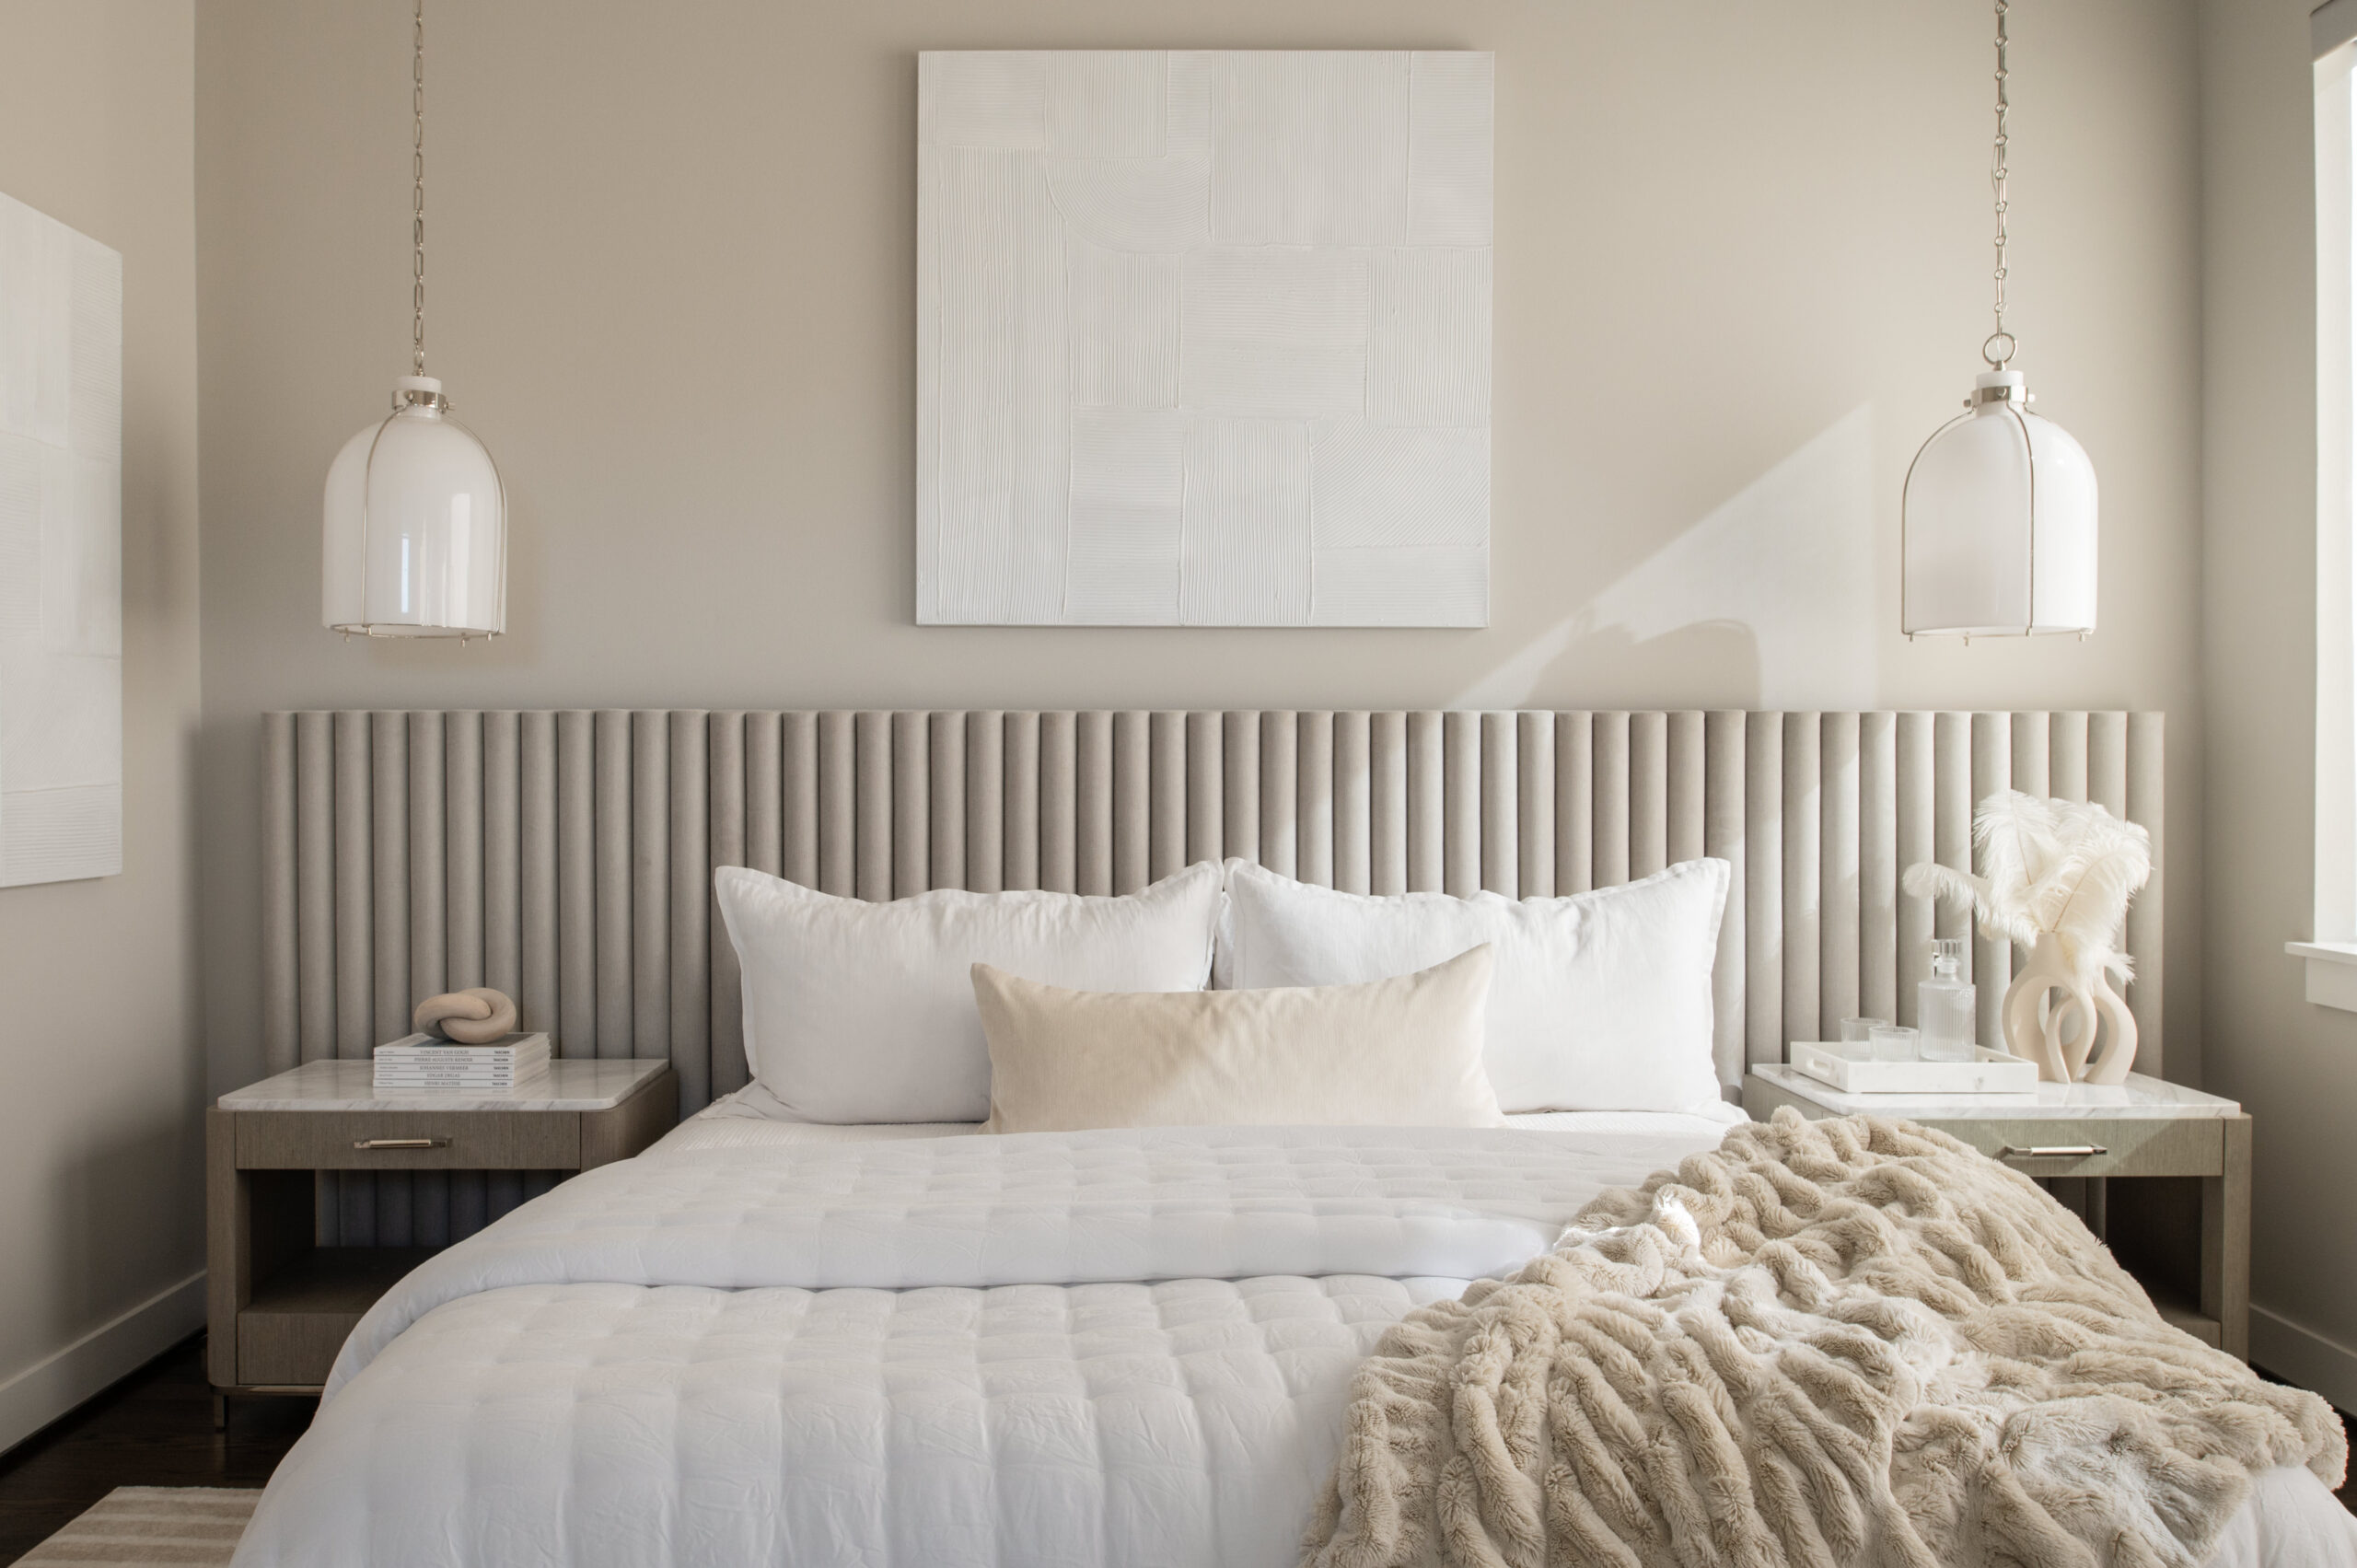 Serene all white and tan bedroom interior design